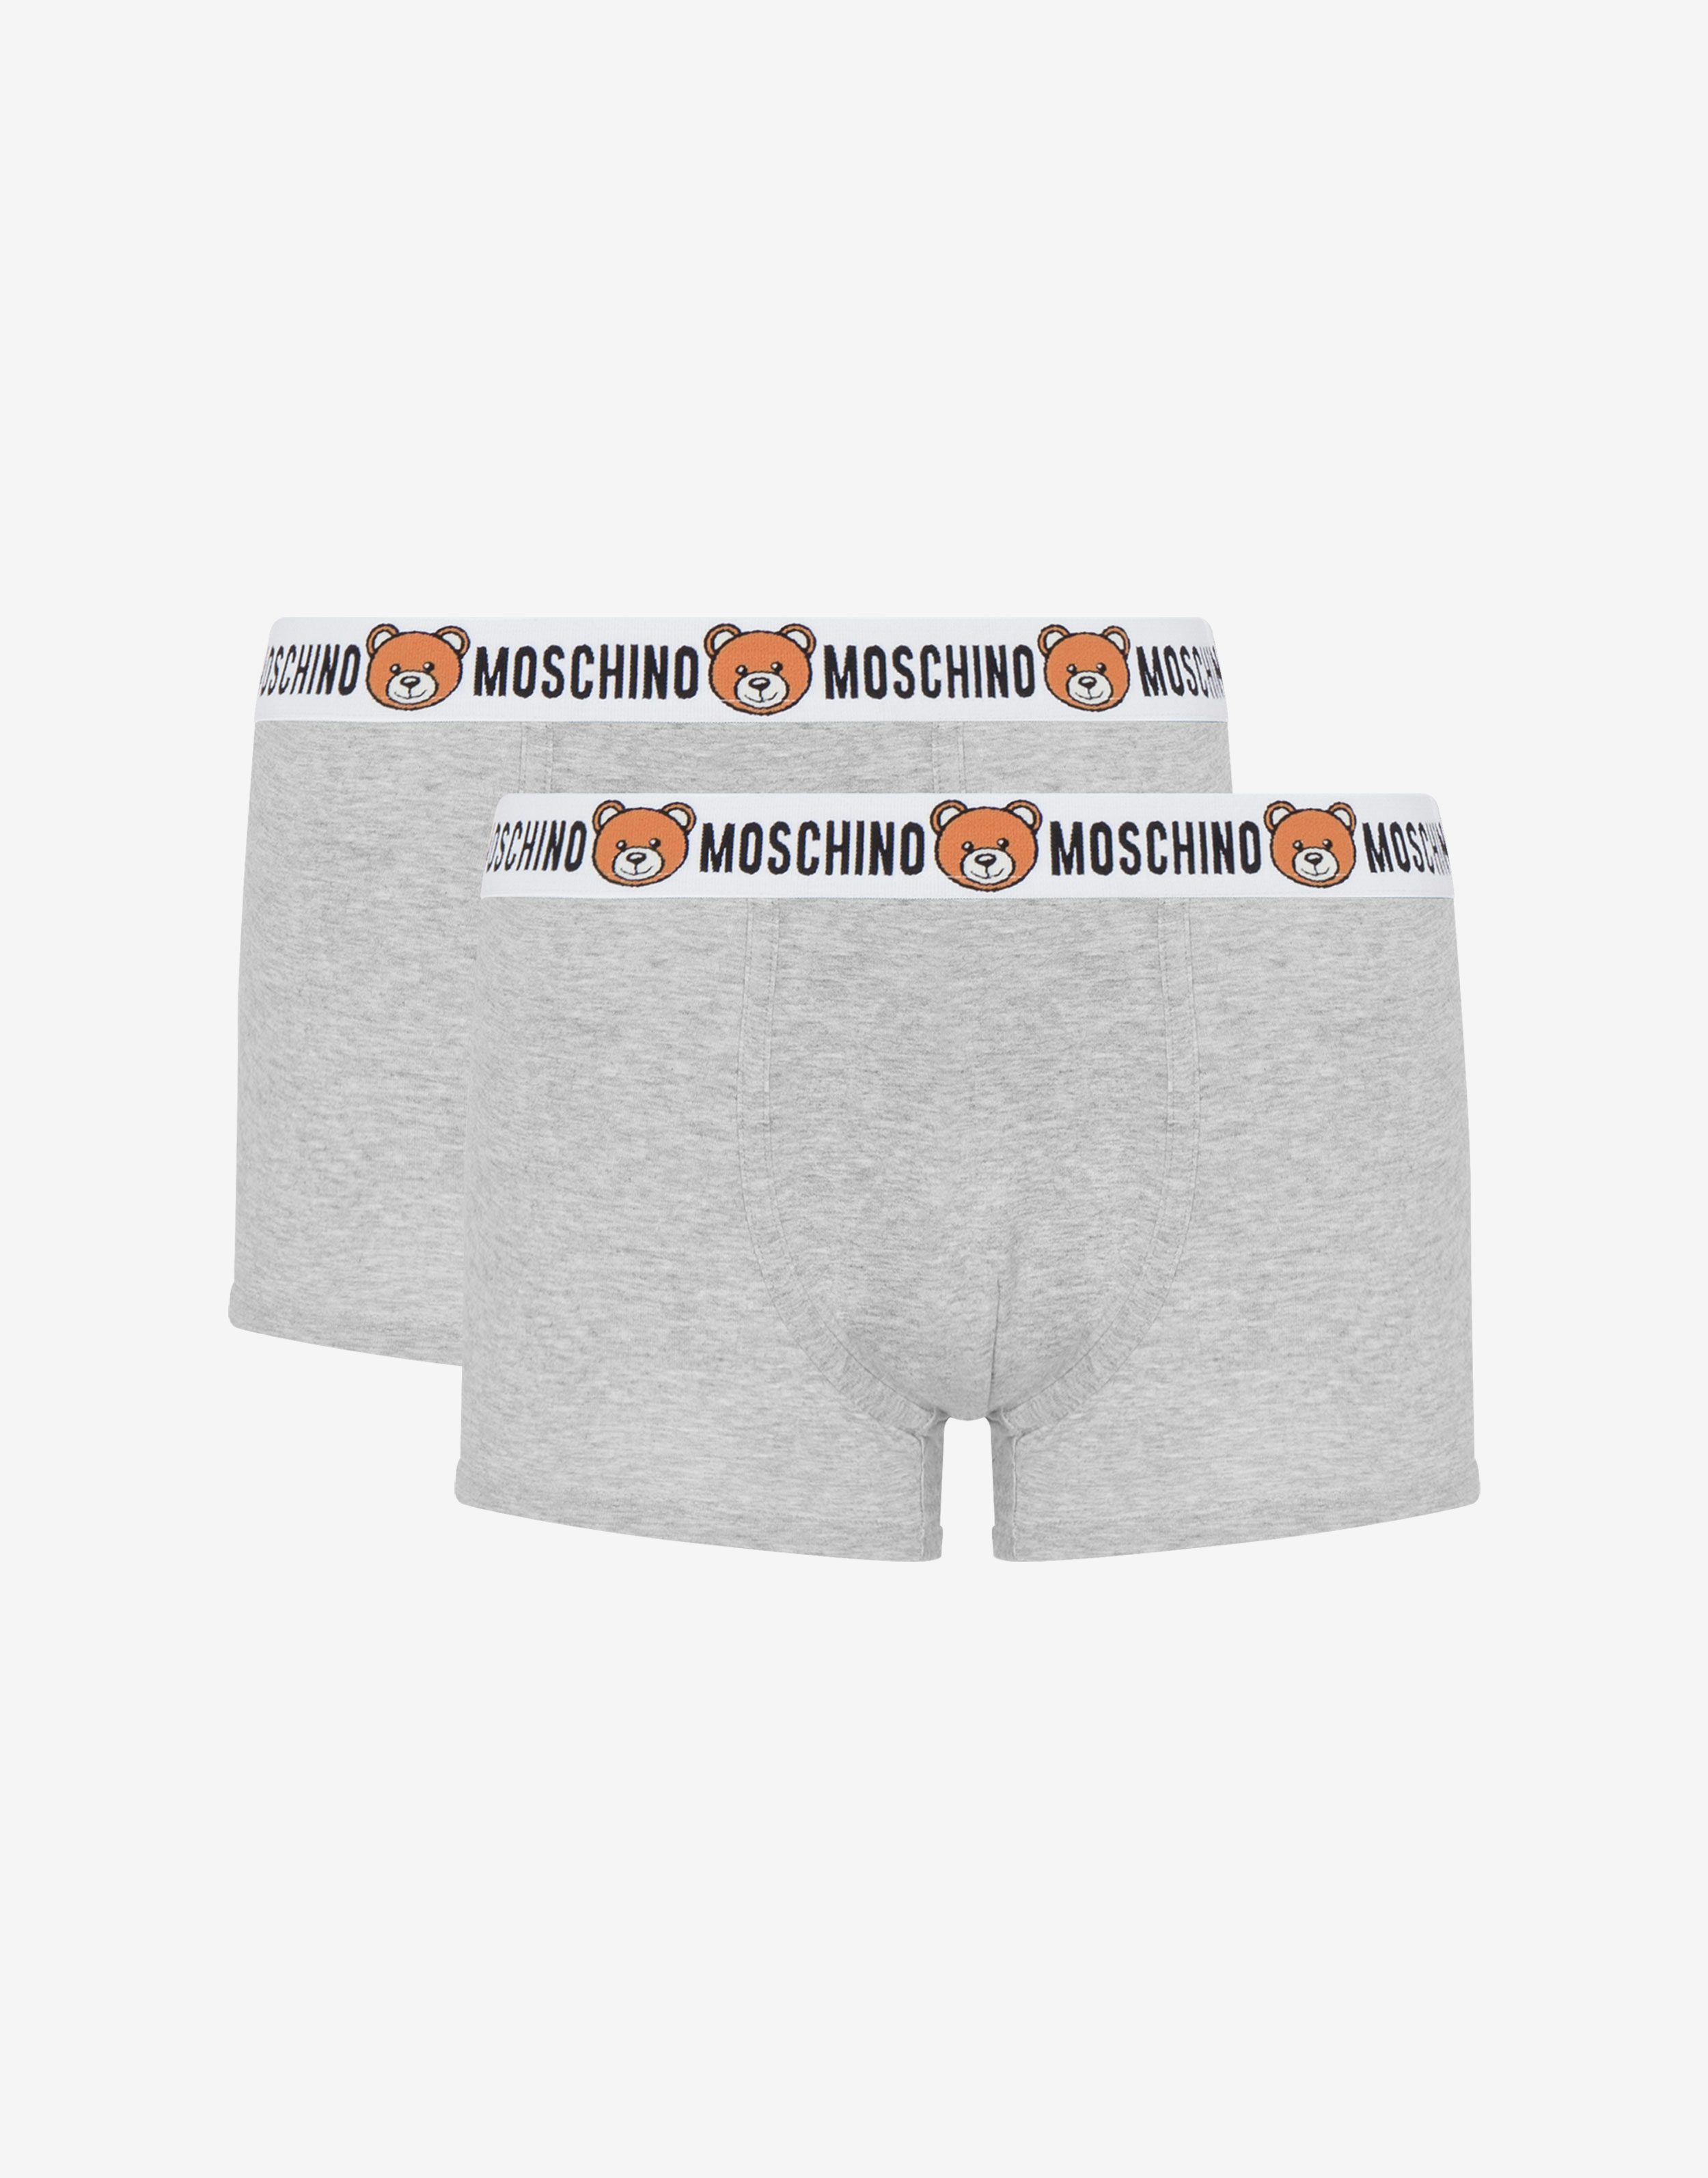 Moschino Underwear - Boxer for Man - White - 322V1A139543005555